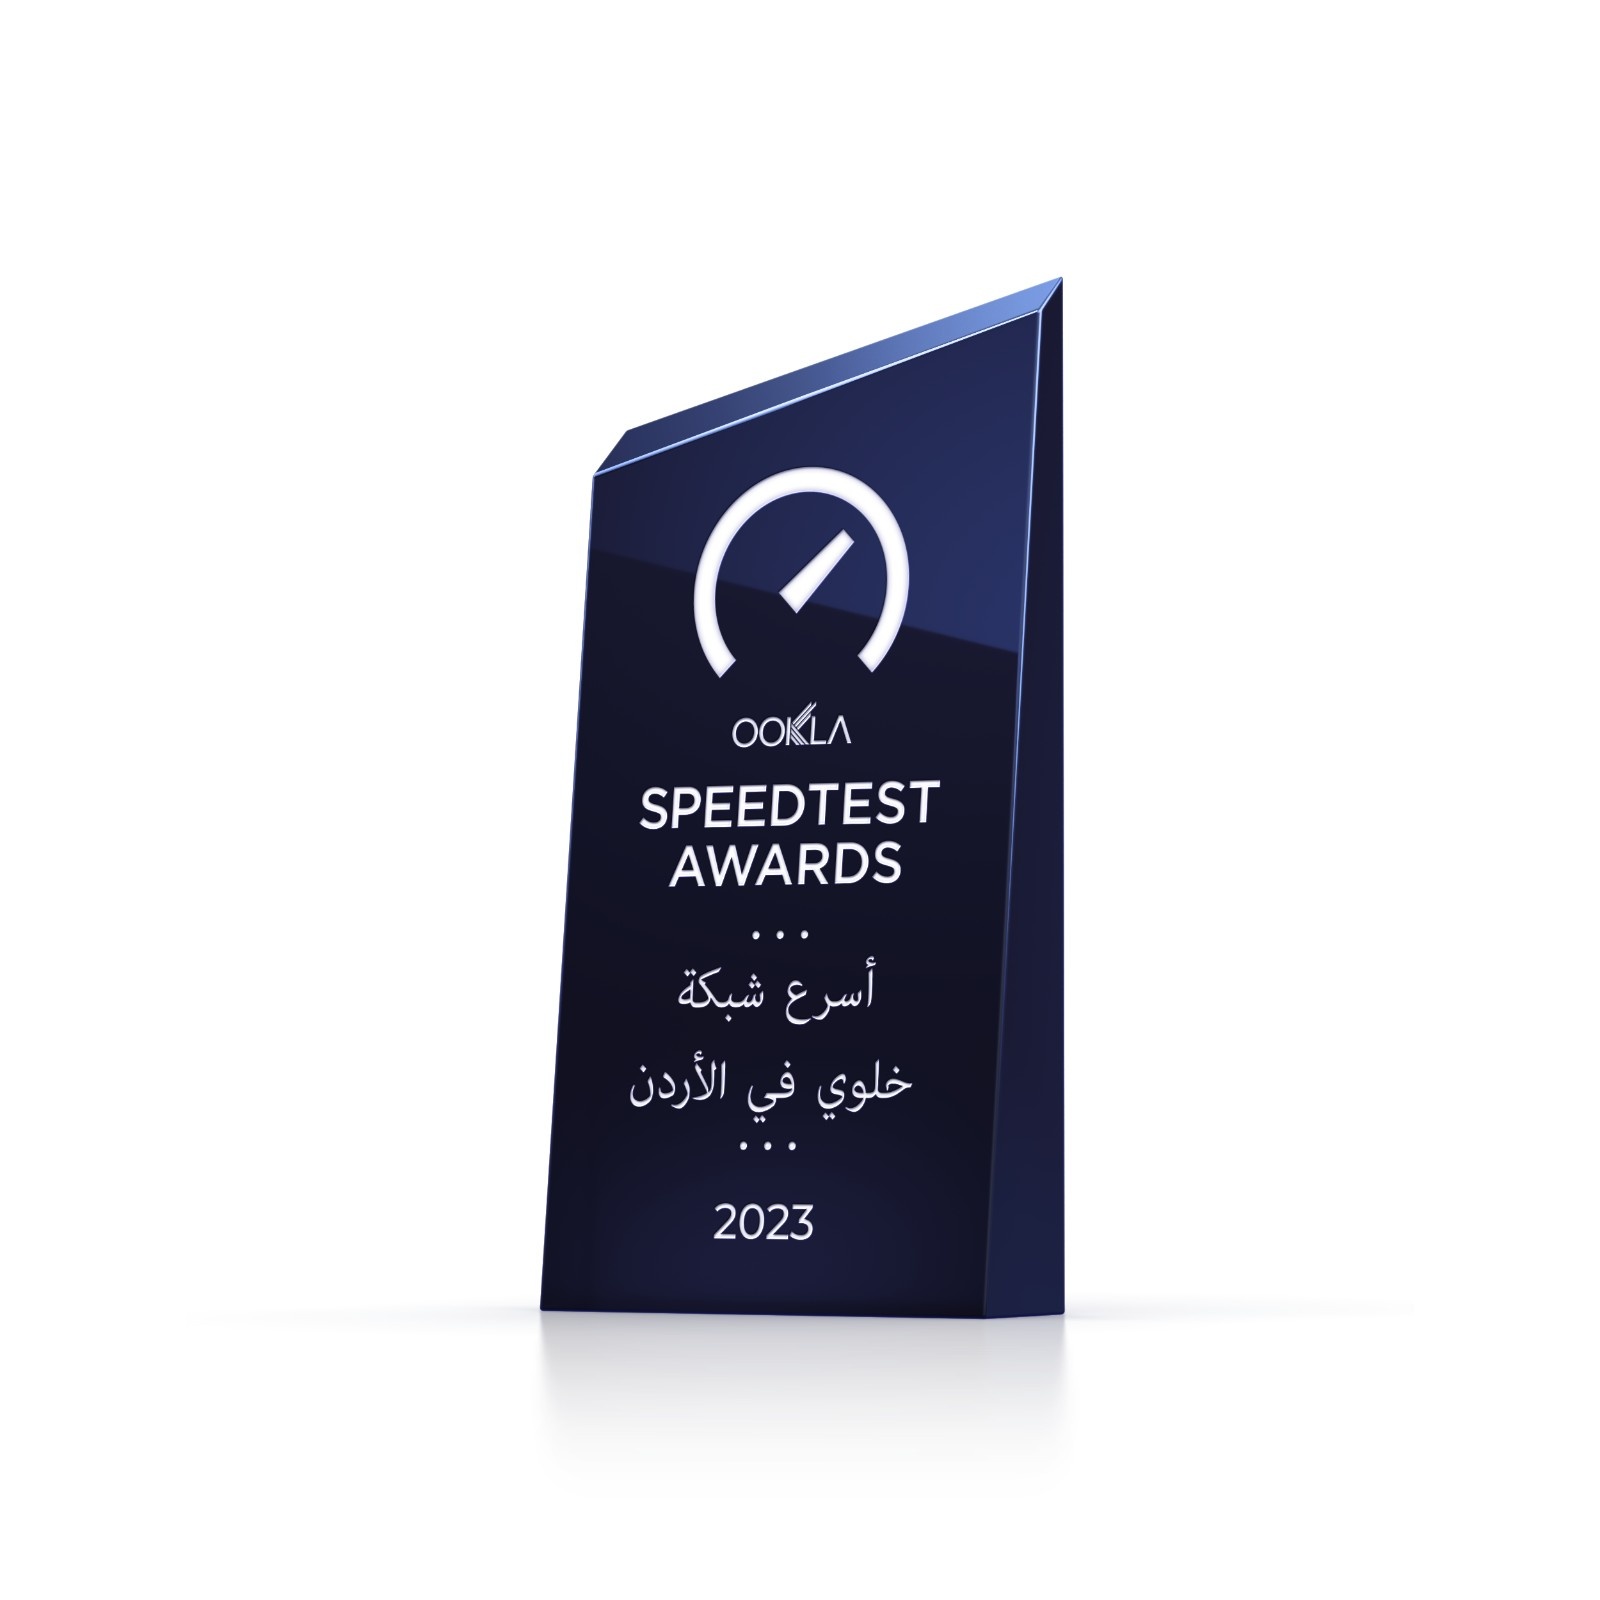 Speedtest Awards by Ookla: Umniah Jordan’s Fastest Mobile Network